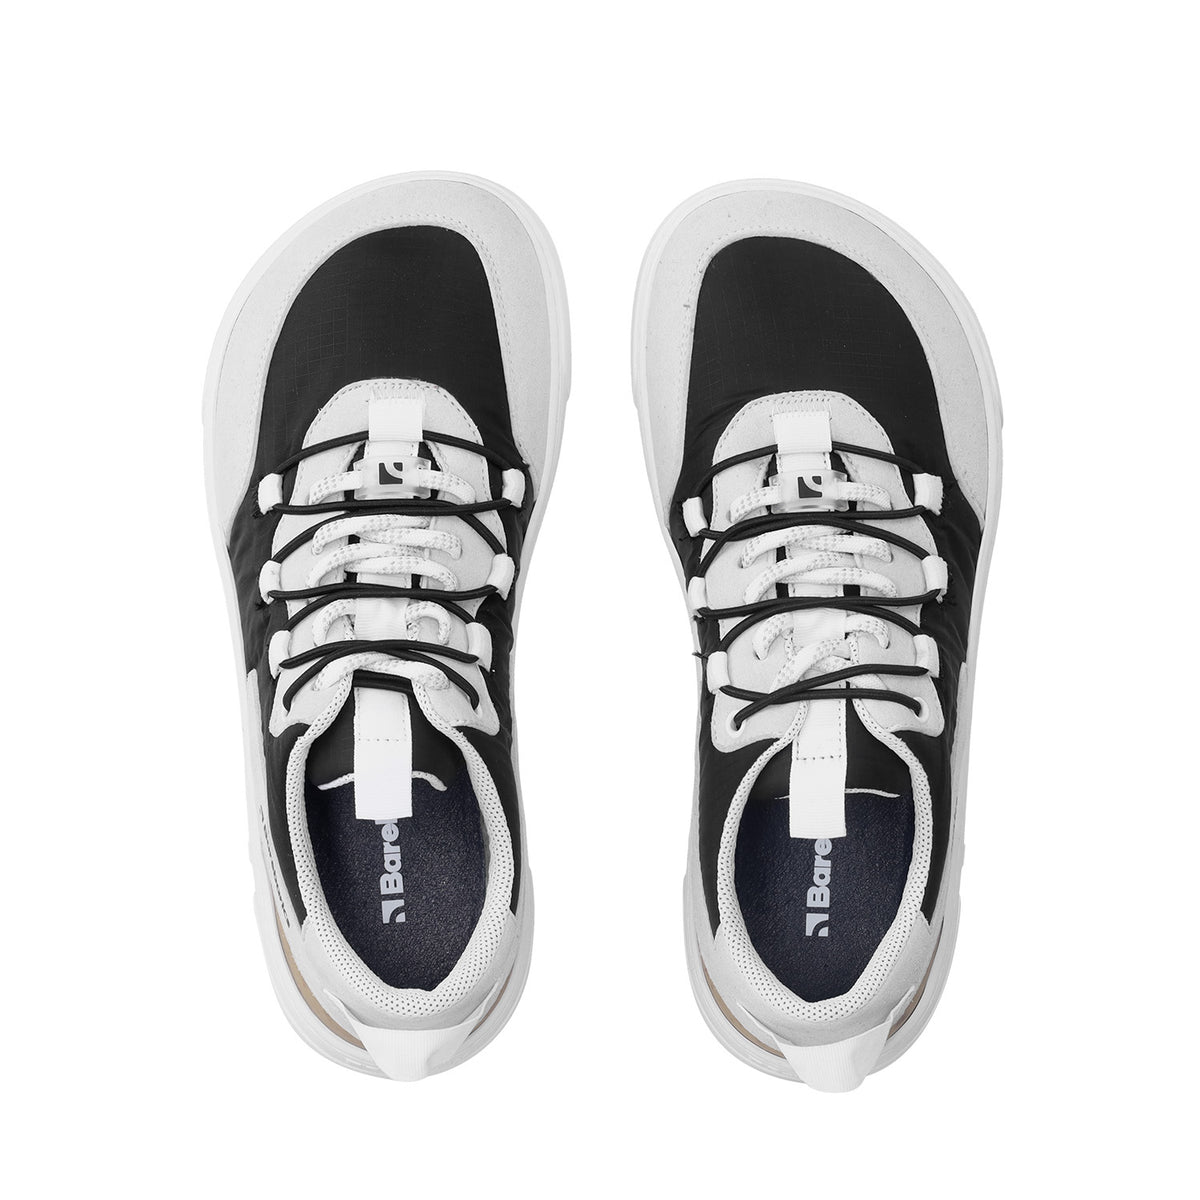 Barefoot Sneakers Barebarics Revive - Light Grey & Black 5  - OzBarefoot